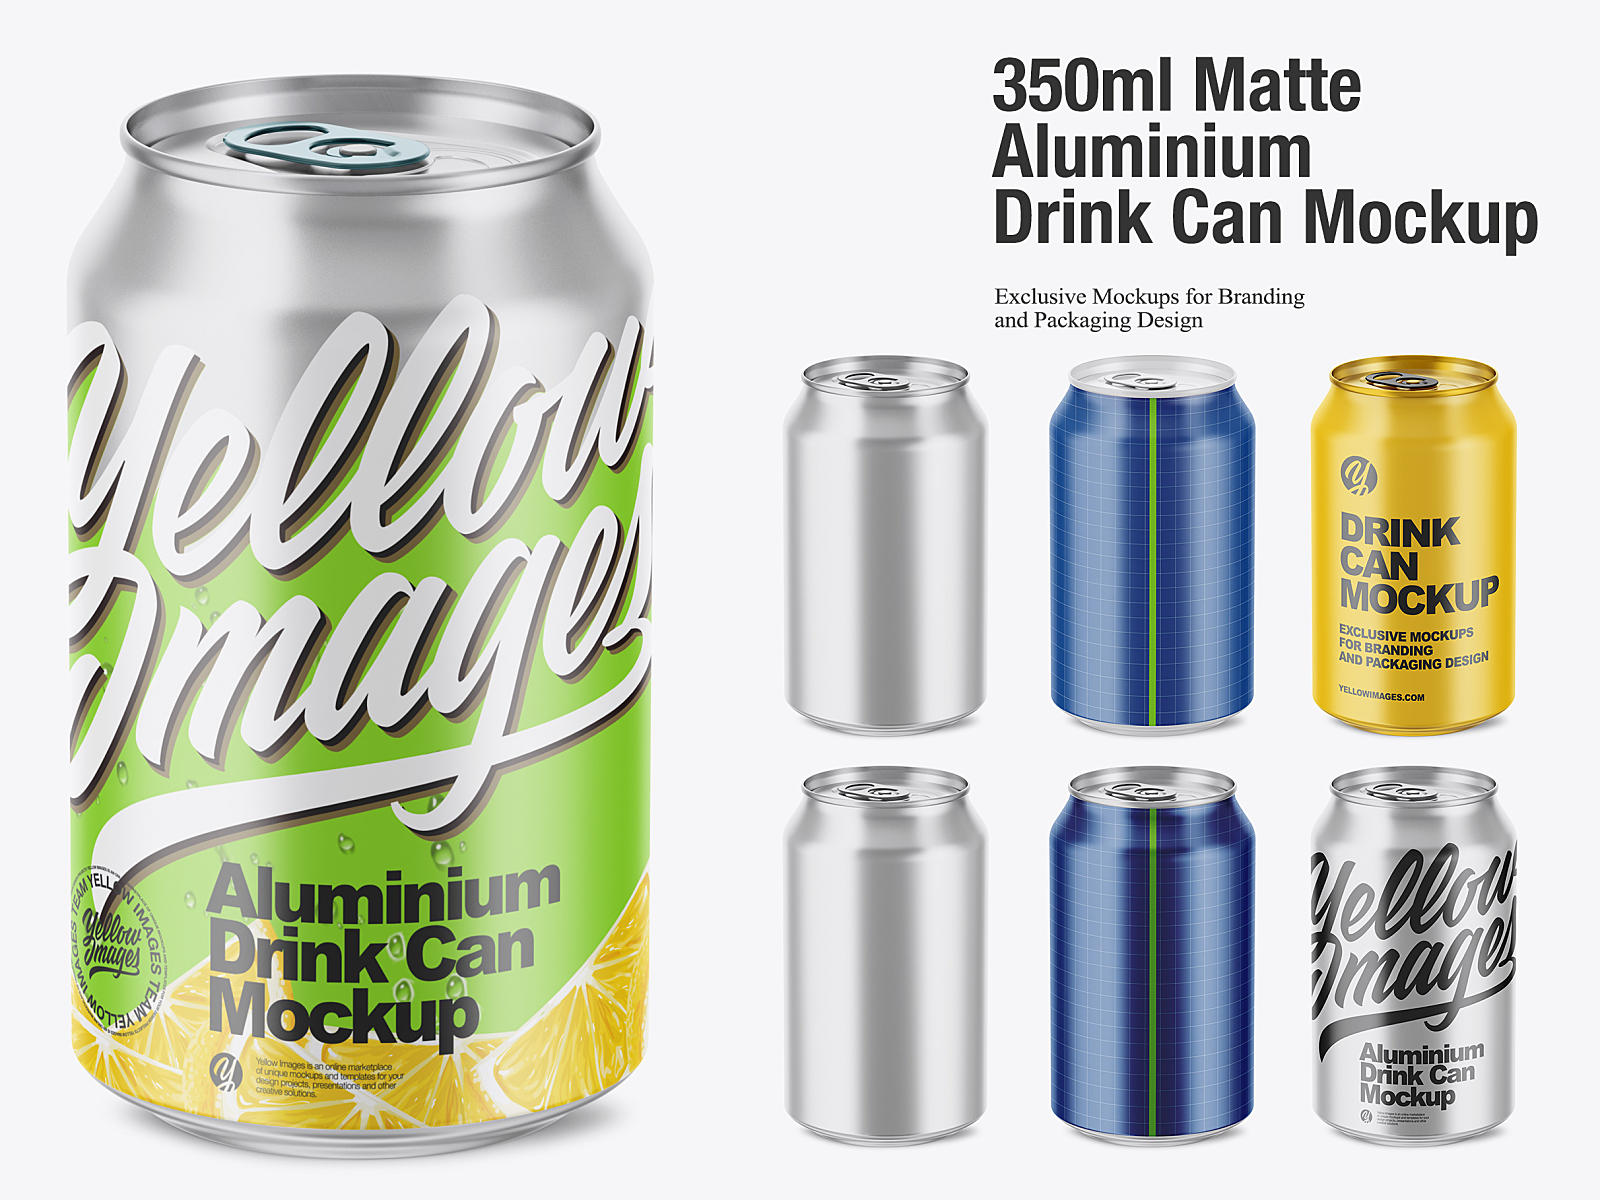 Download 350ml Matte Aluminium Drink Can Mockup By Oleksandr Hlubokyi On Dribbble PSD Mockup Templates